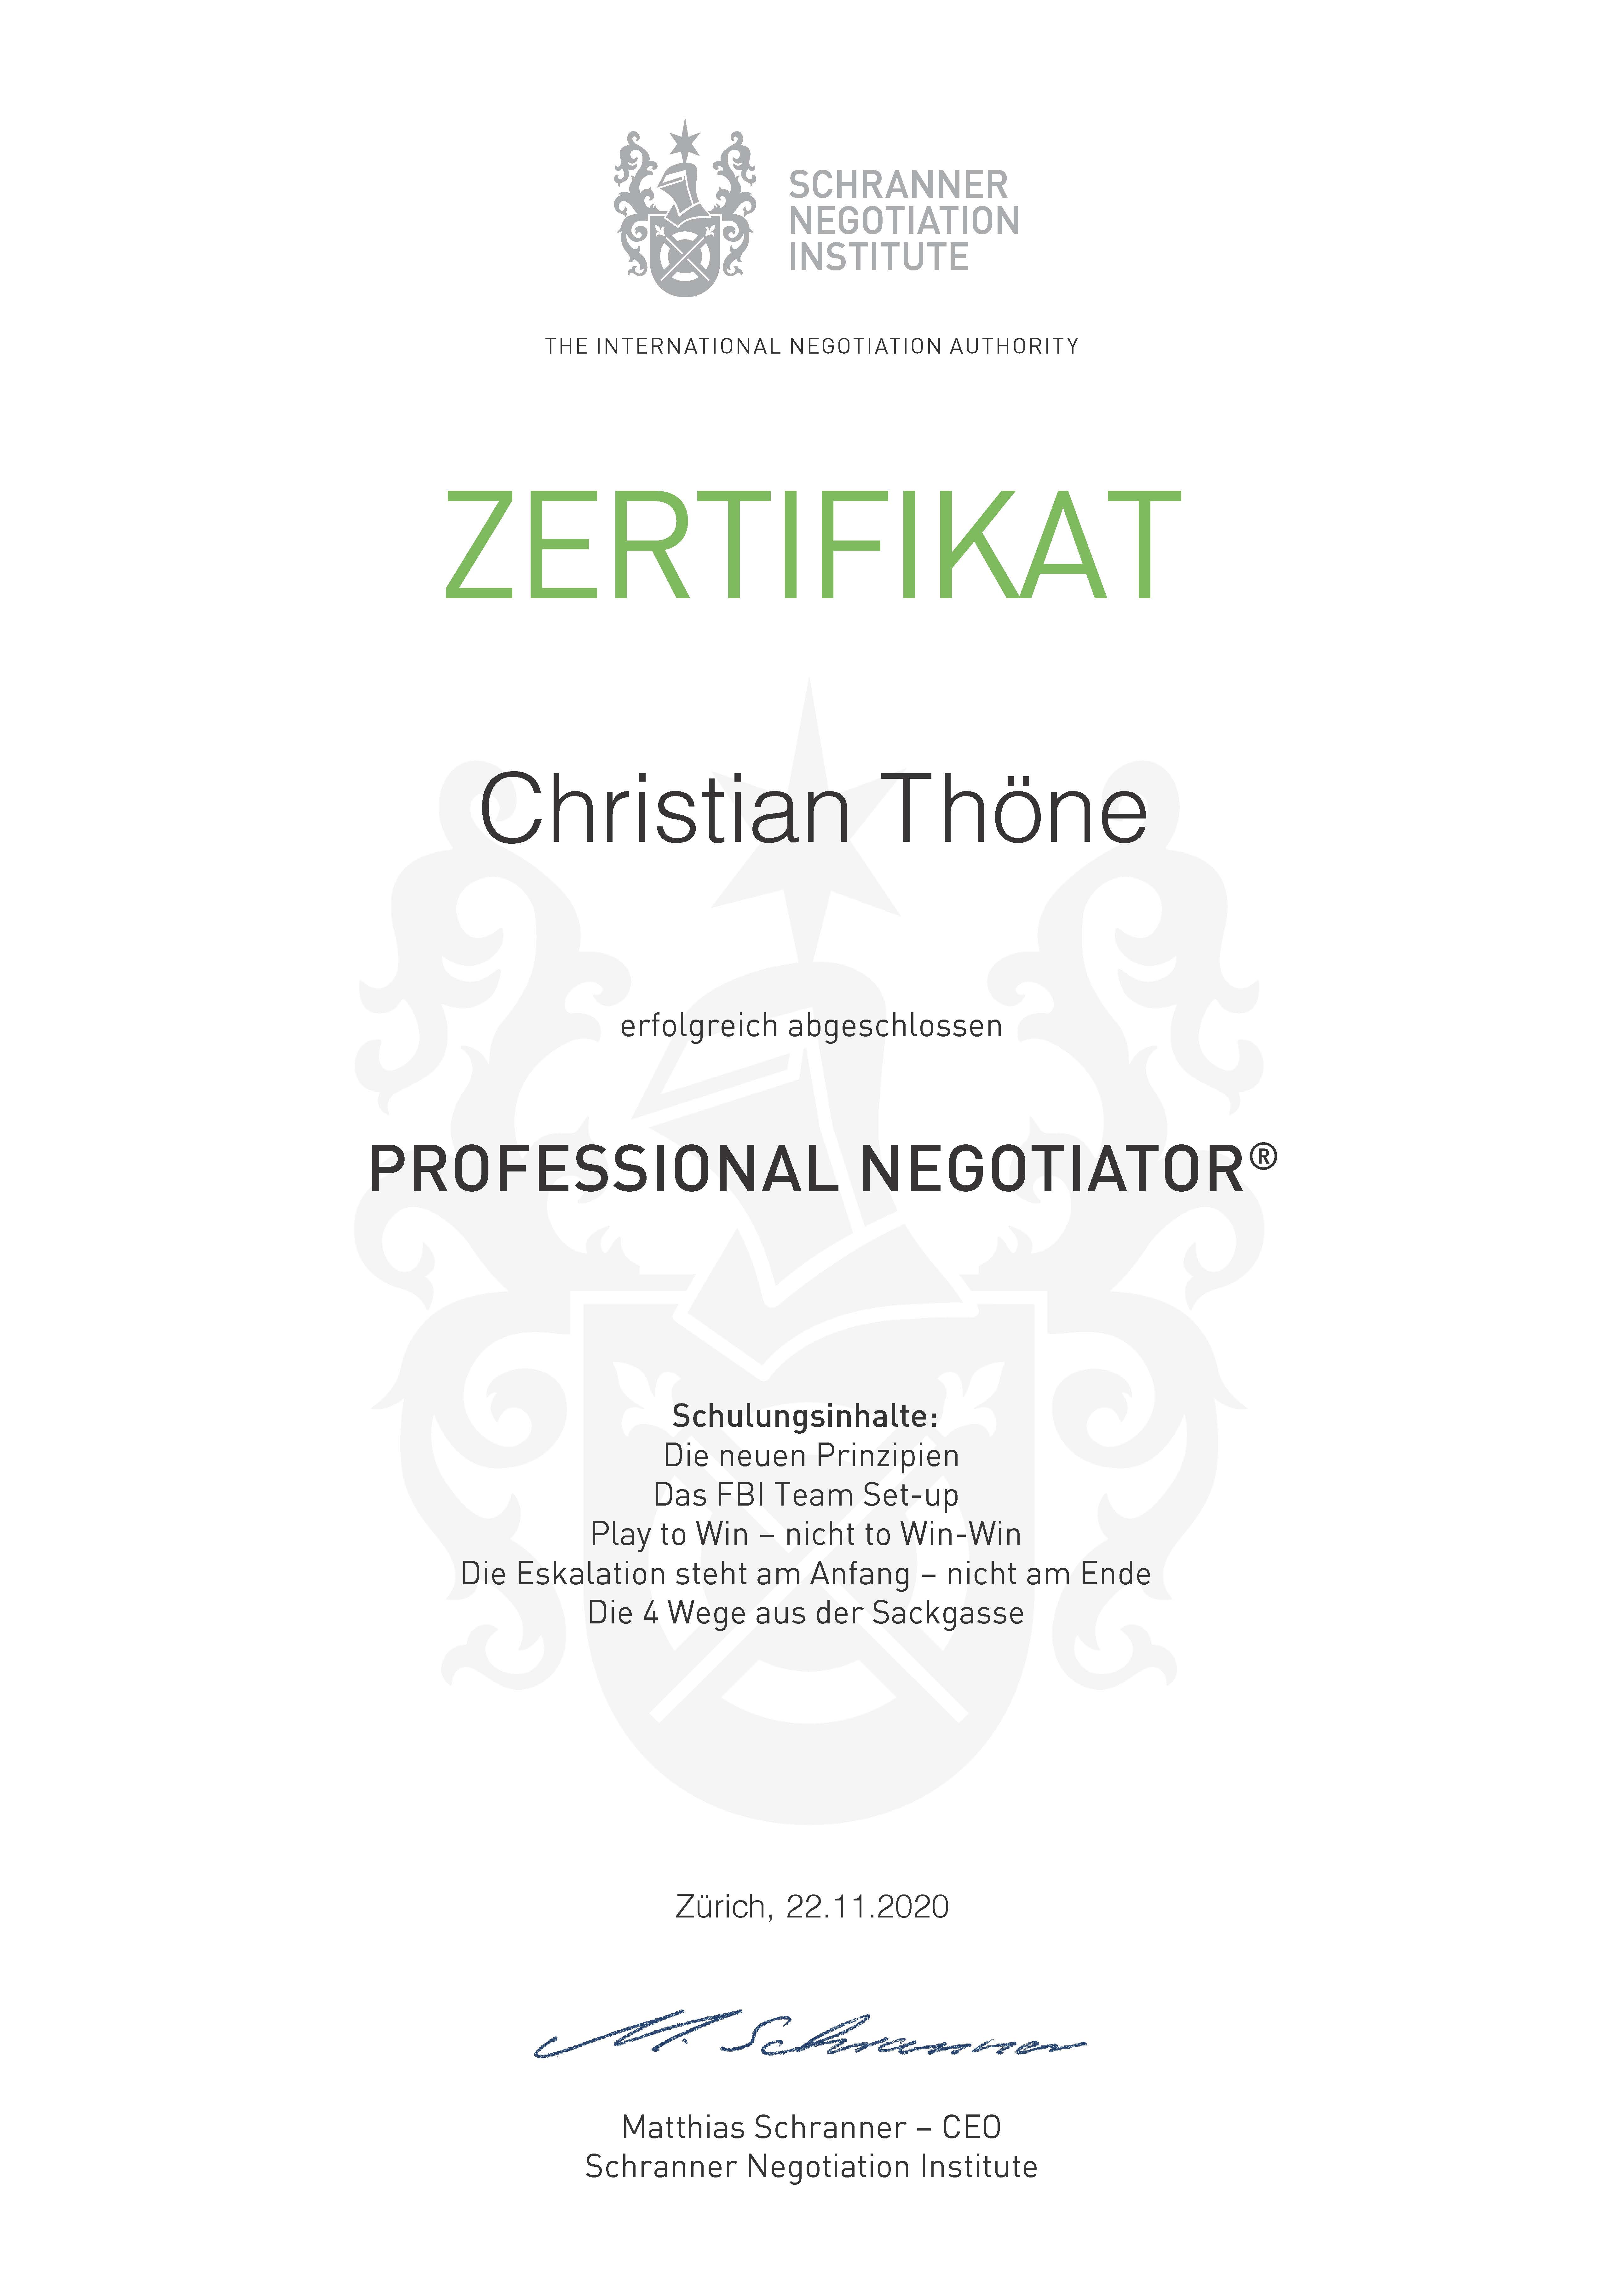 Zertifizierung als PROFESSIONAL NEGOTIATOR®